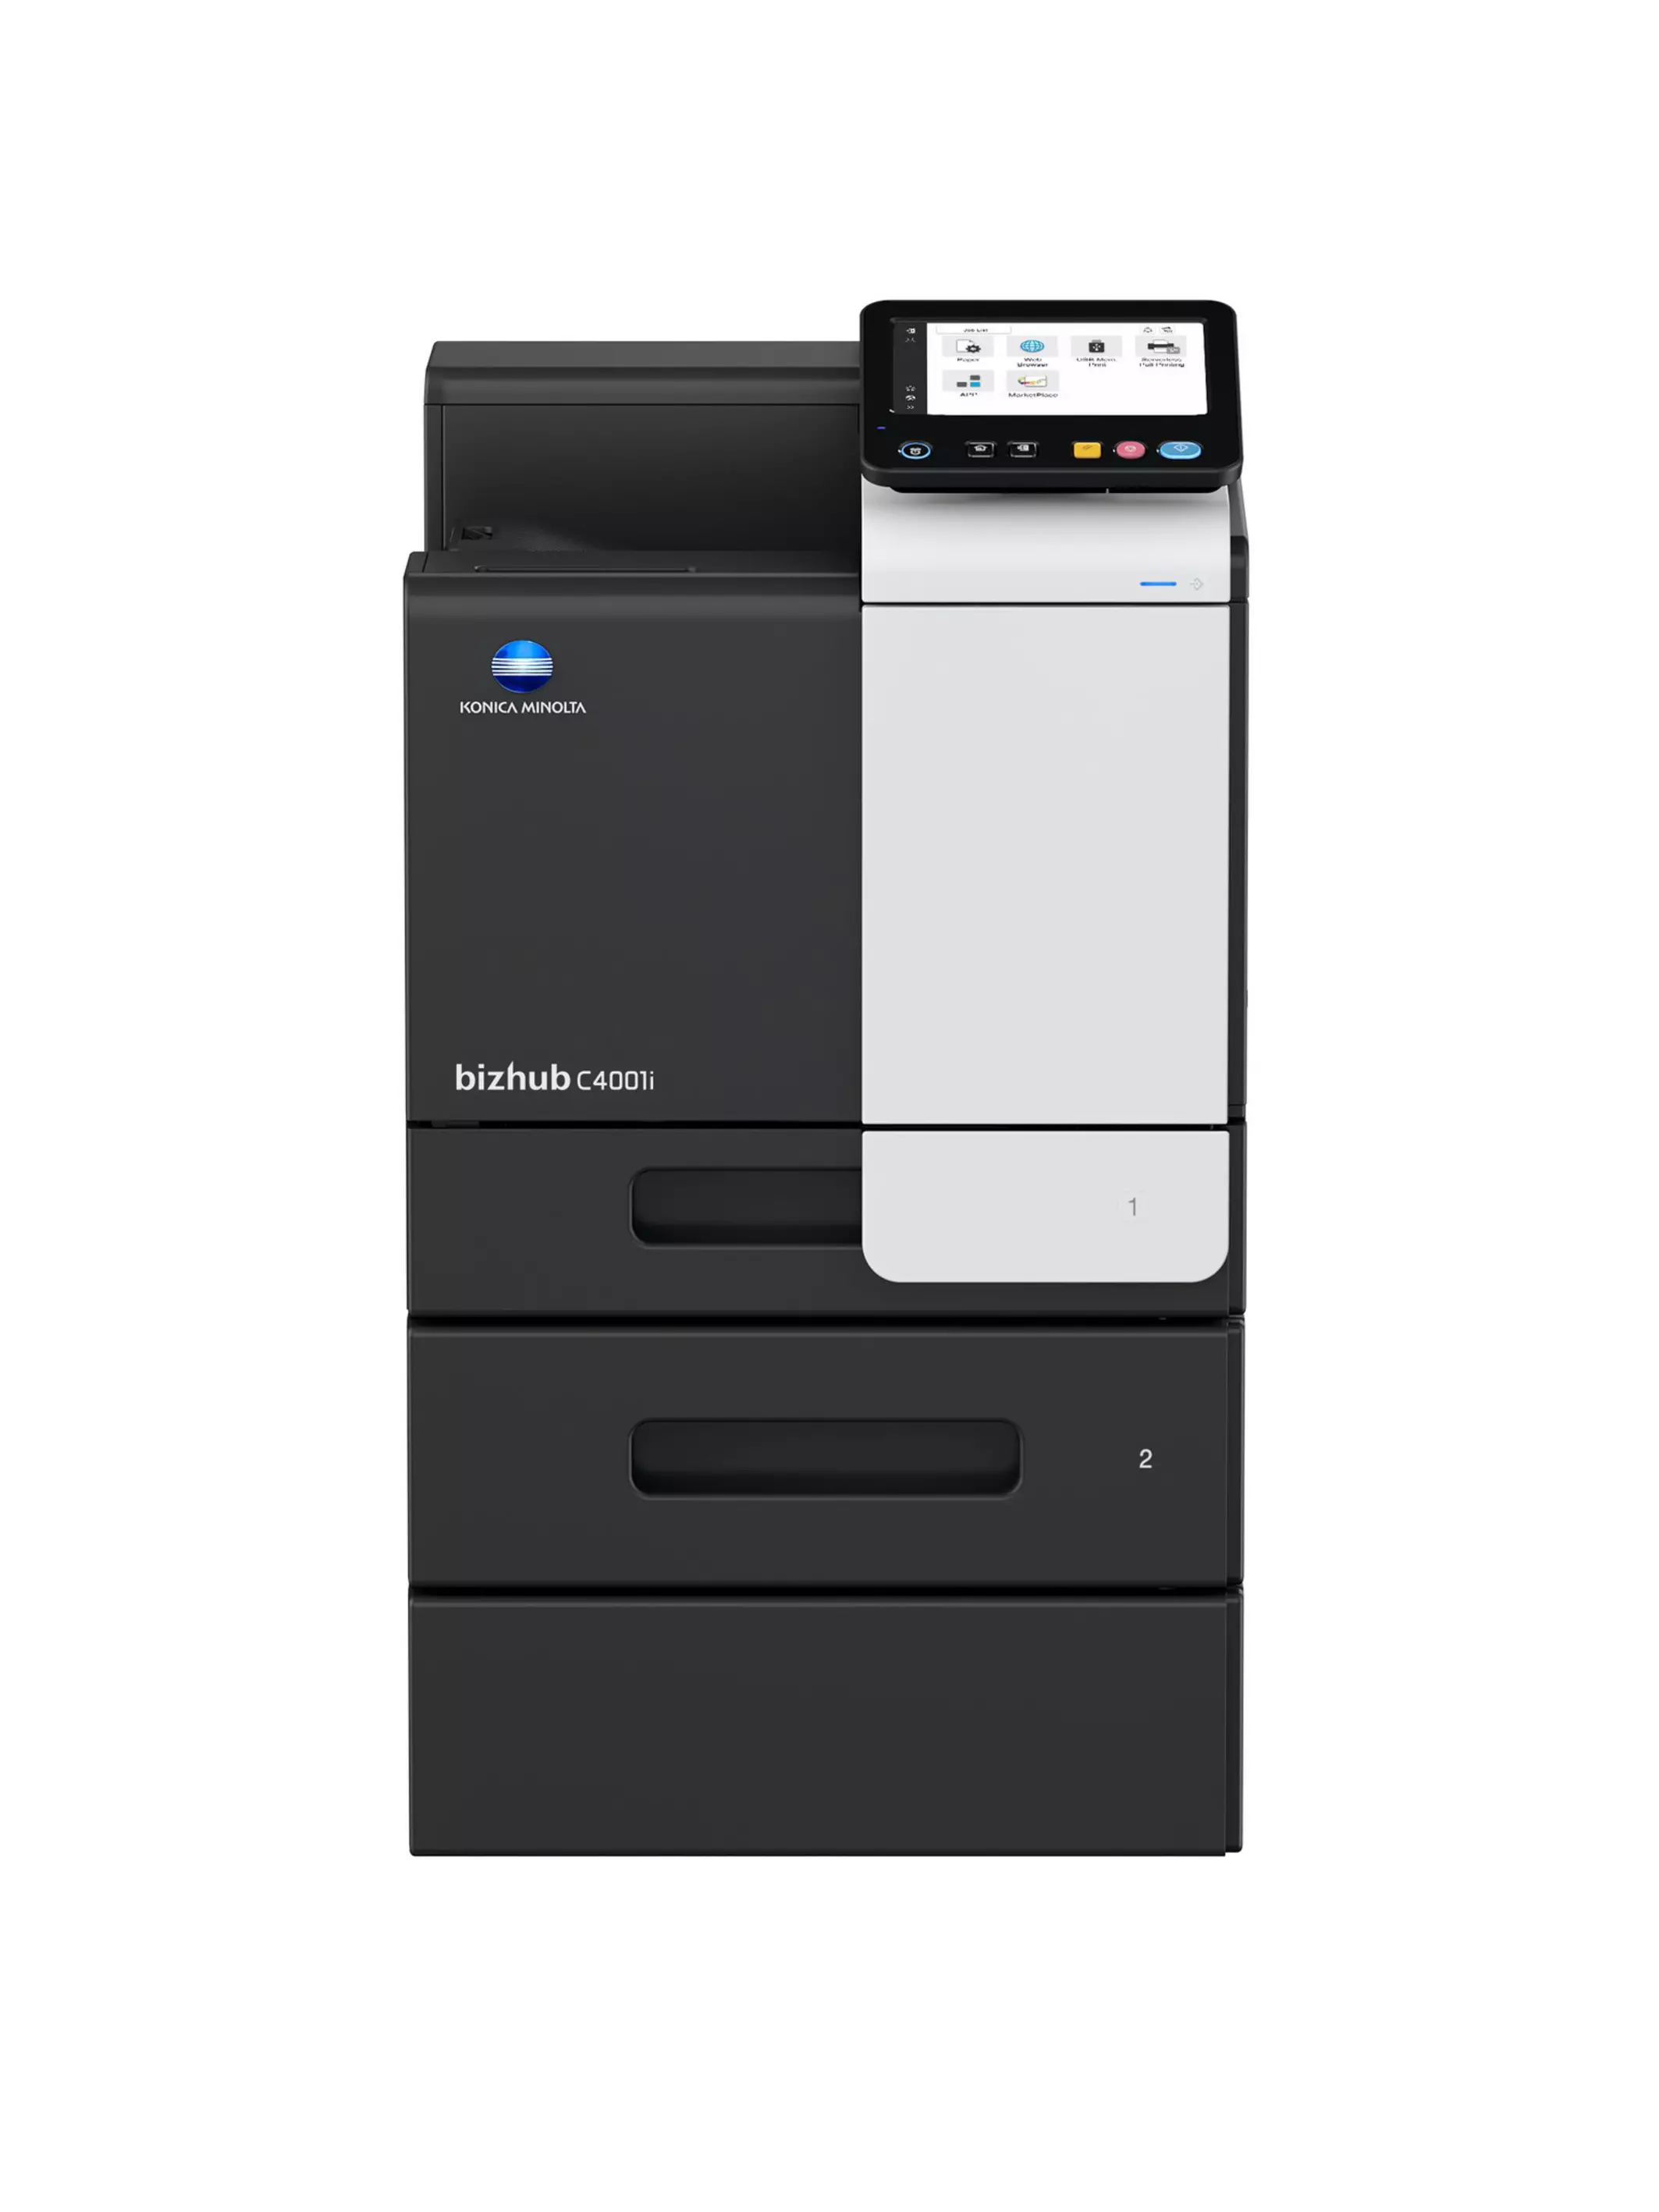 Konica Minolta i-series bizhub C4001i multifunctional printer